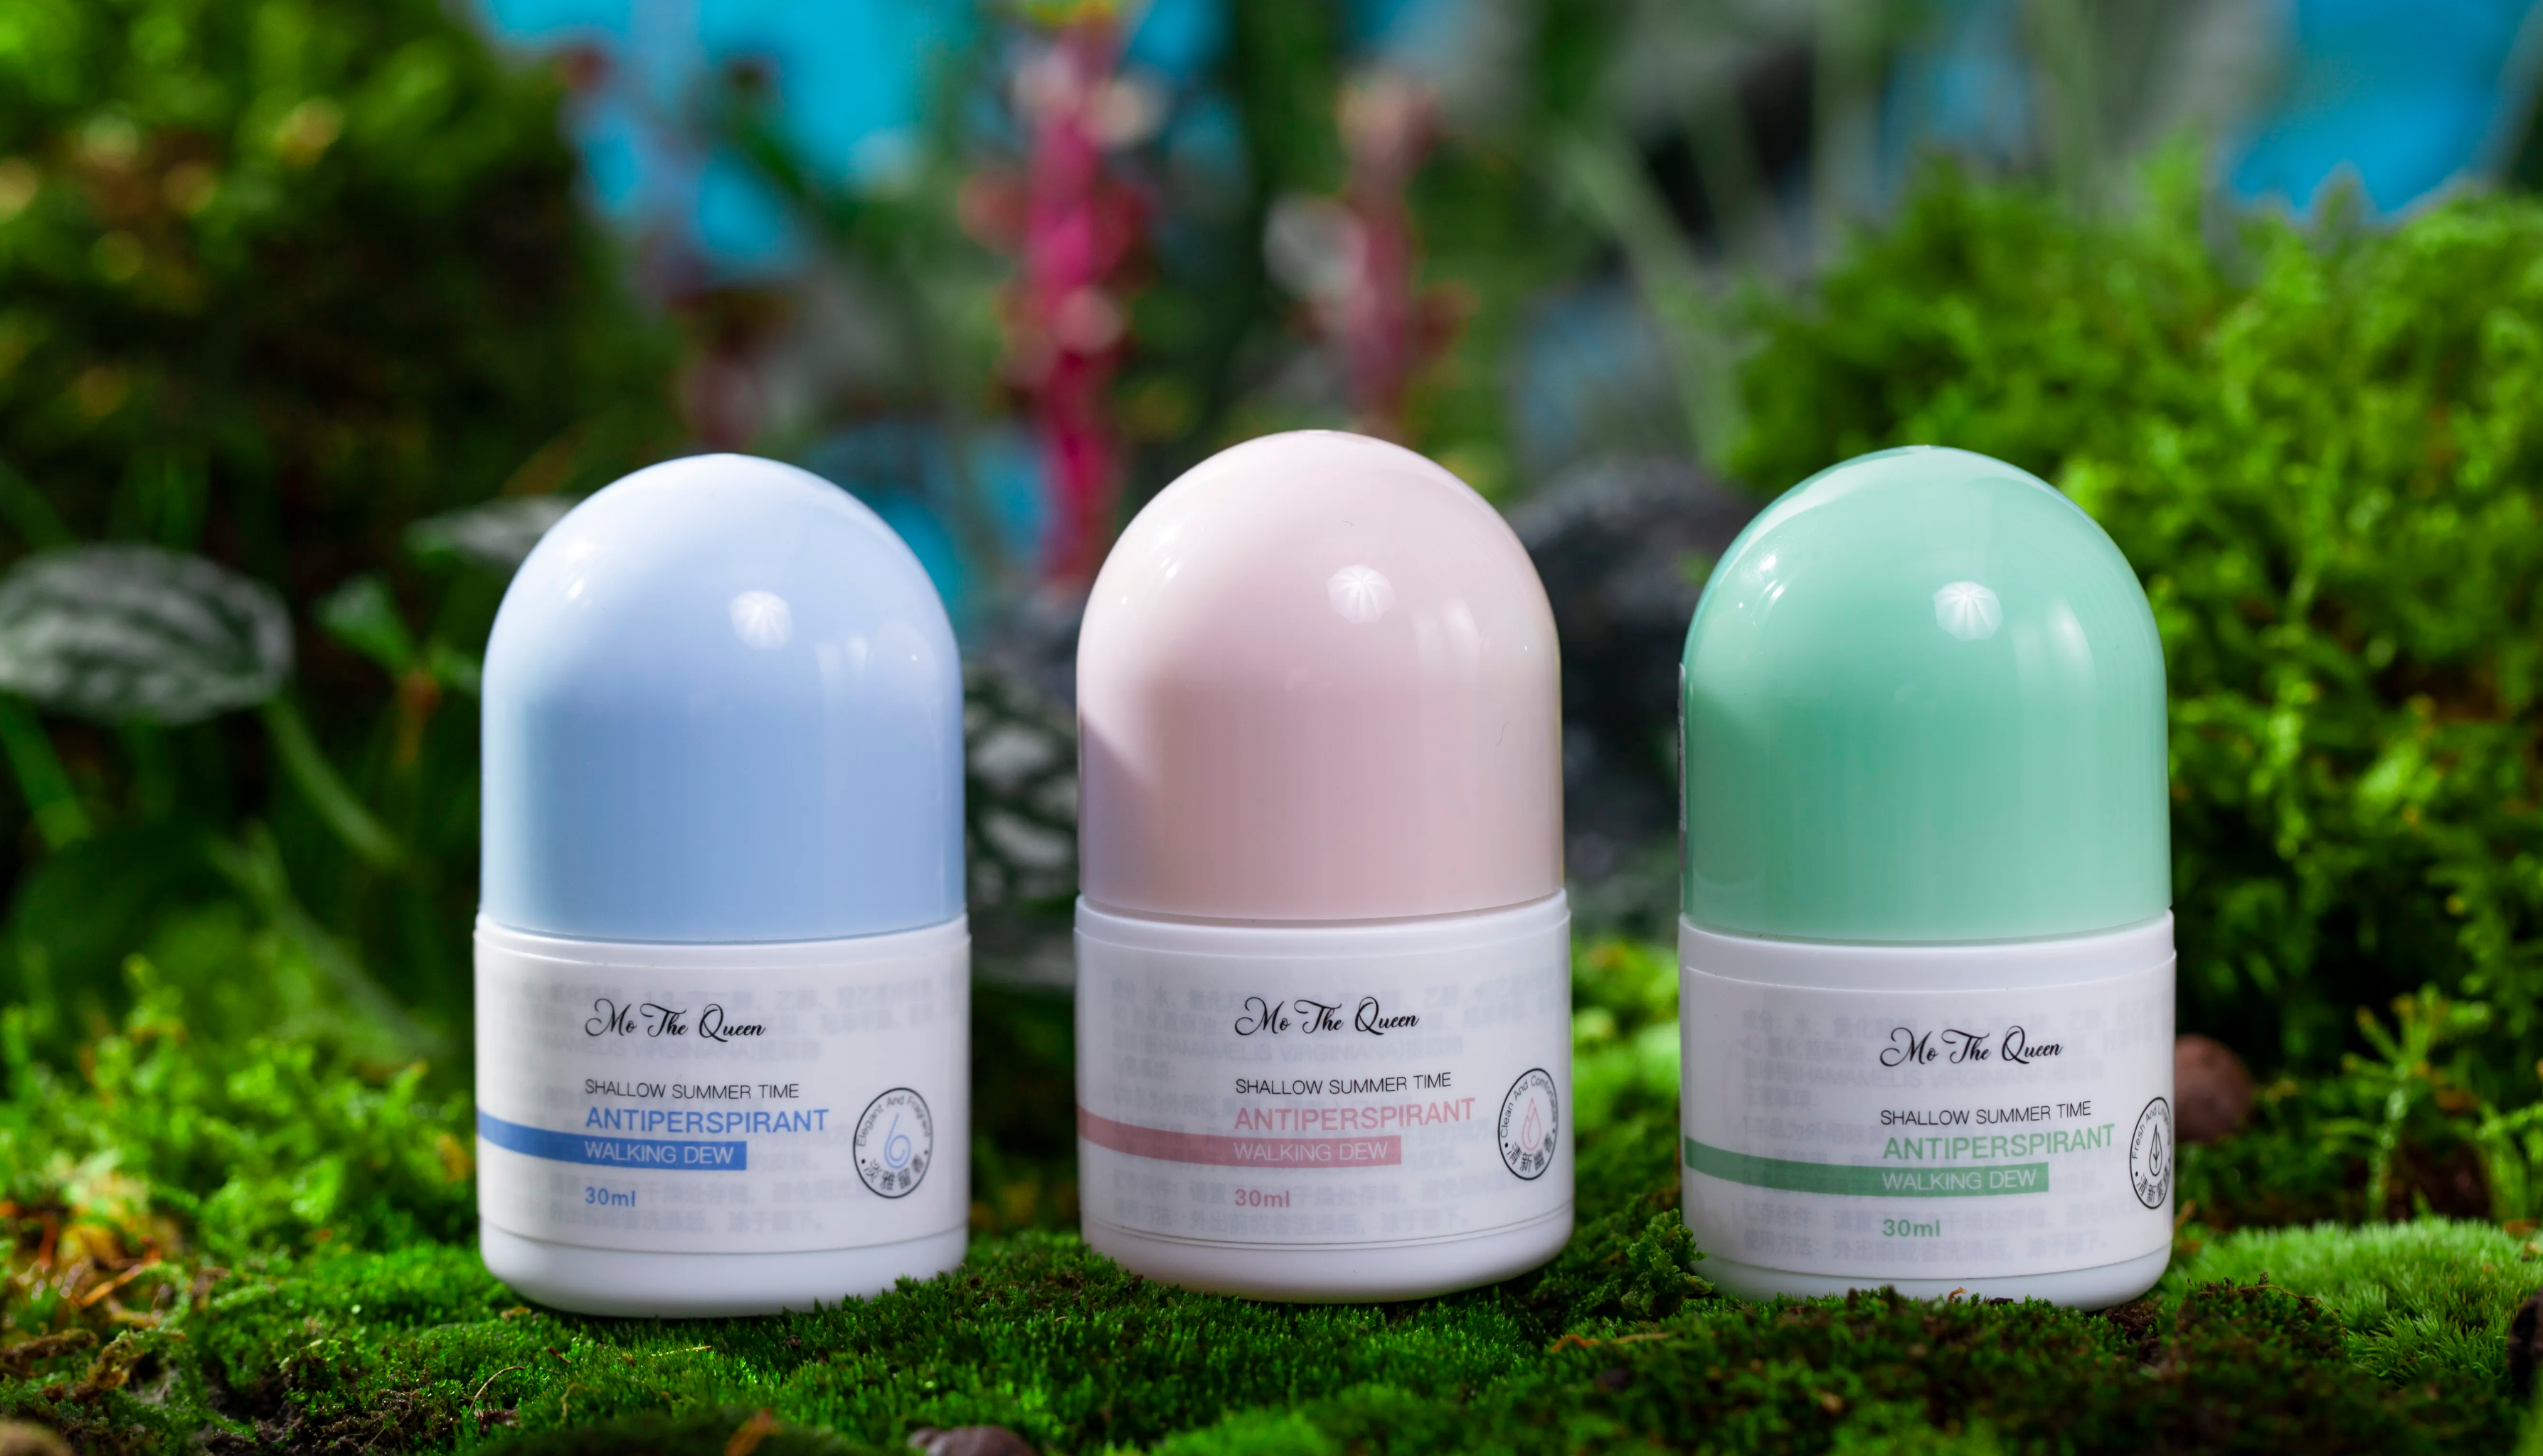 Futuristic Freshness: BEYAQI's Technologically Enhanced Deodorant Packaging